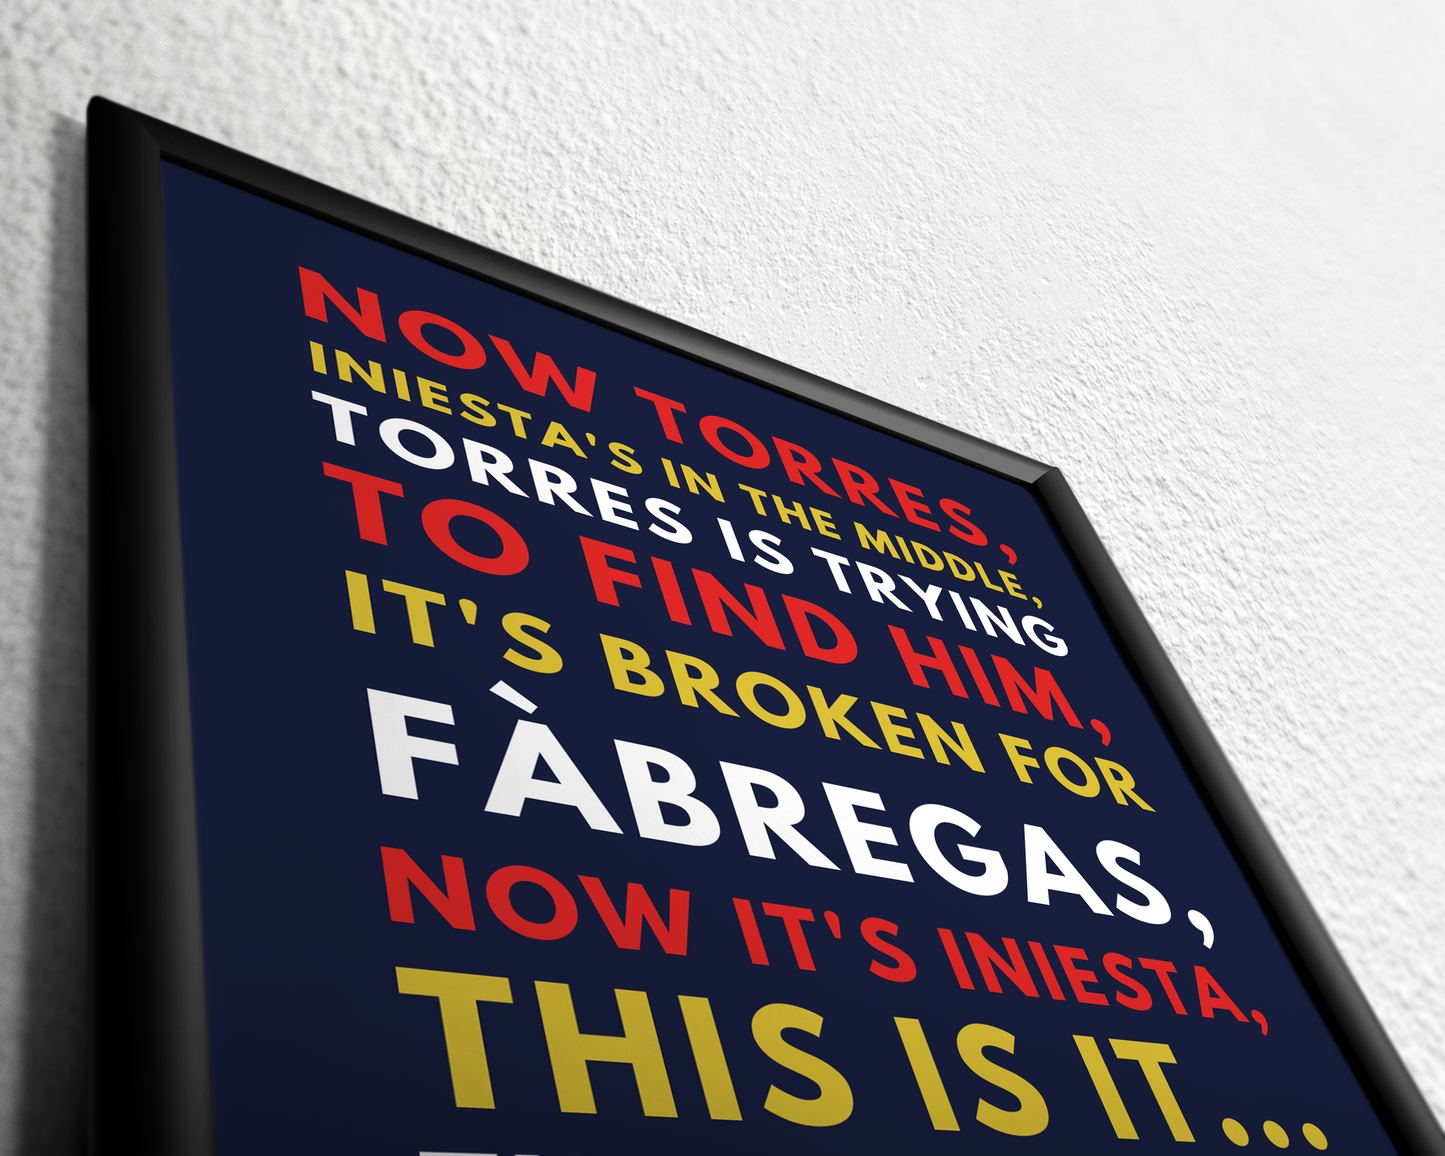 Andrés Iniesta - That's the goal!